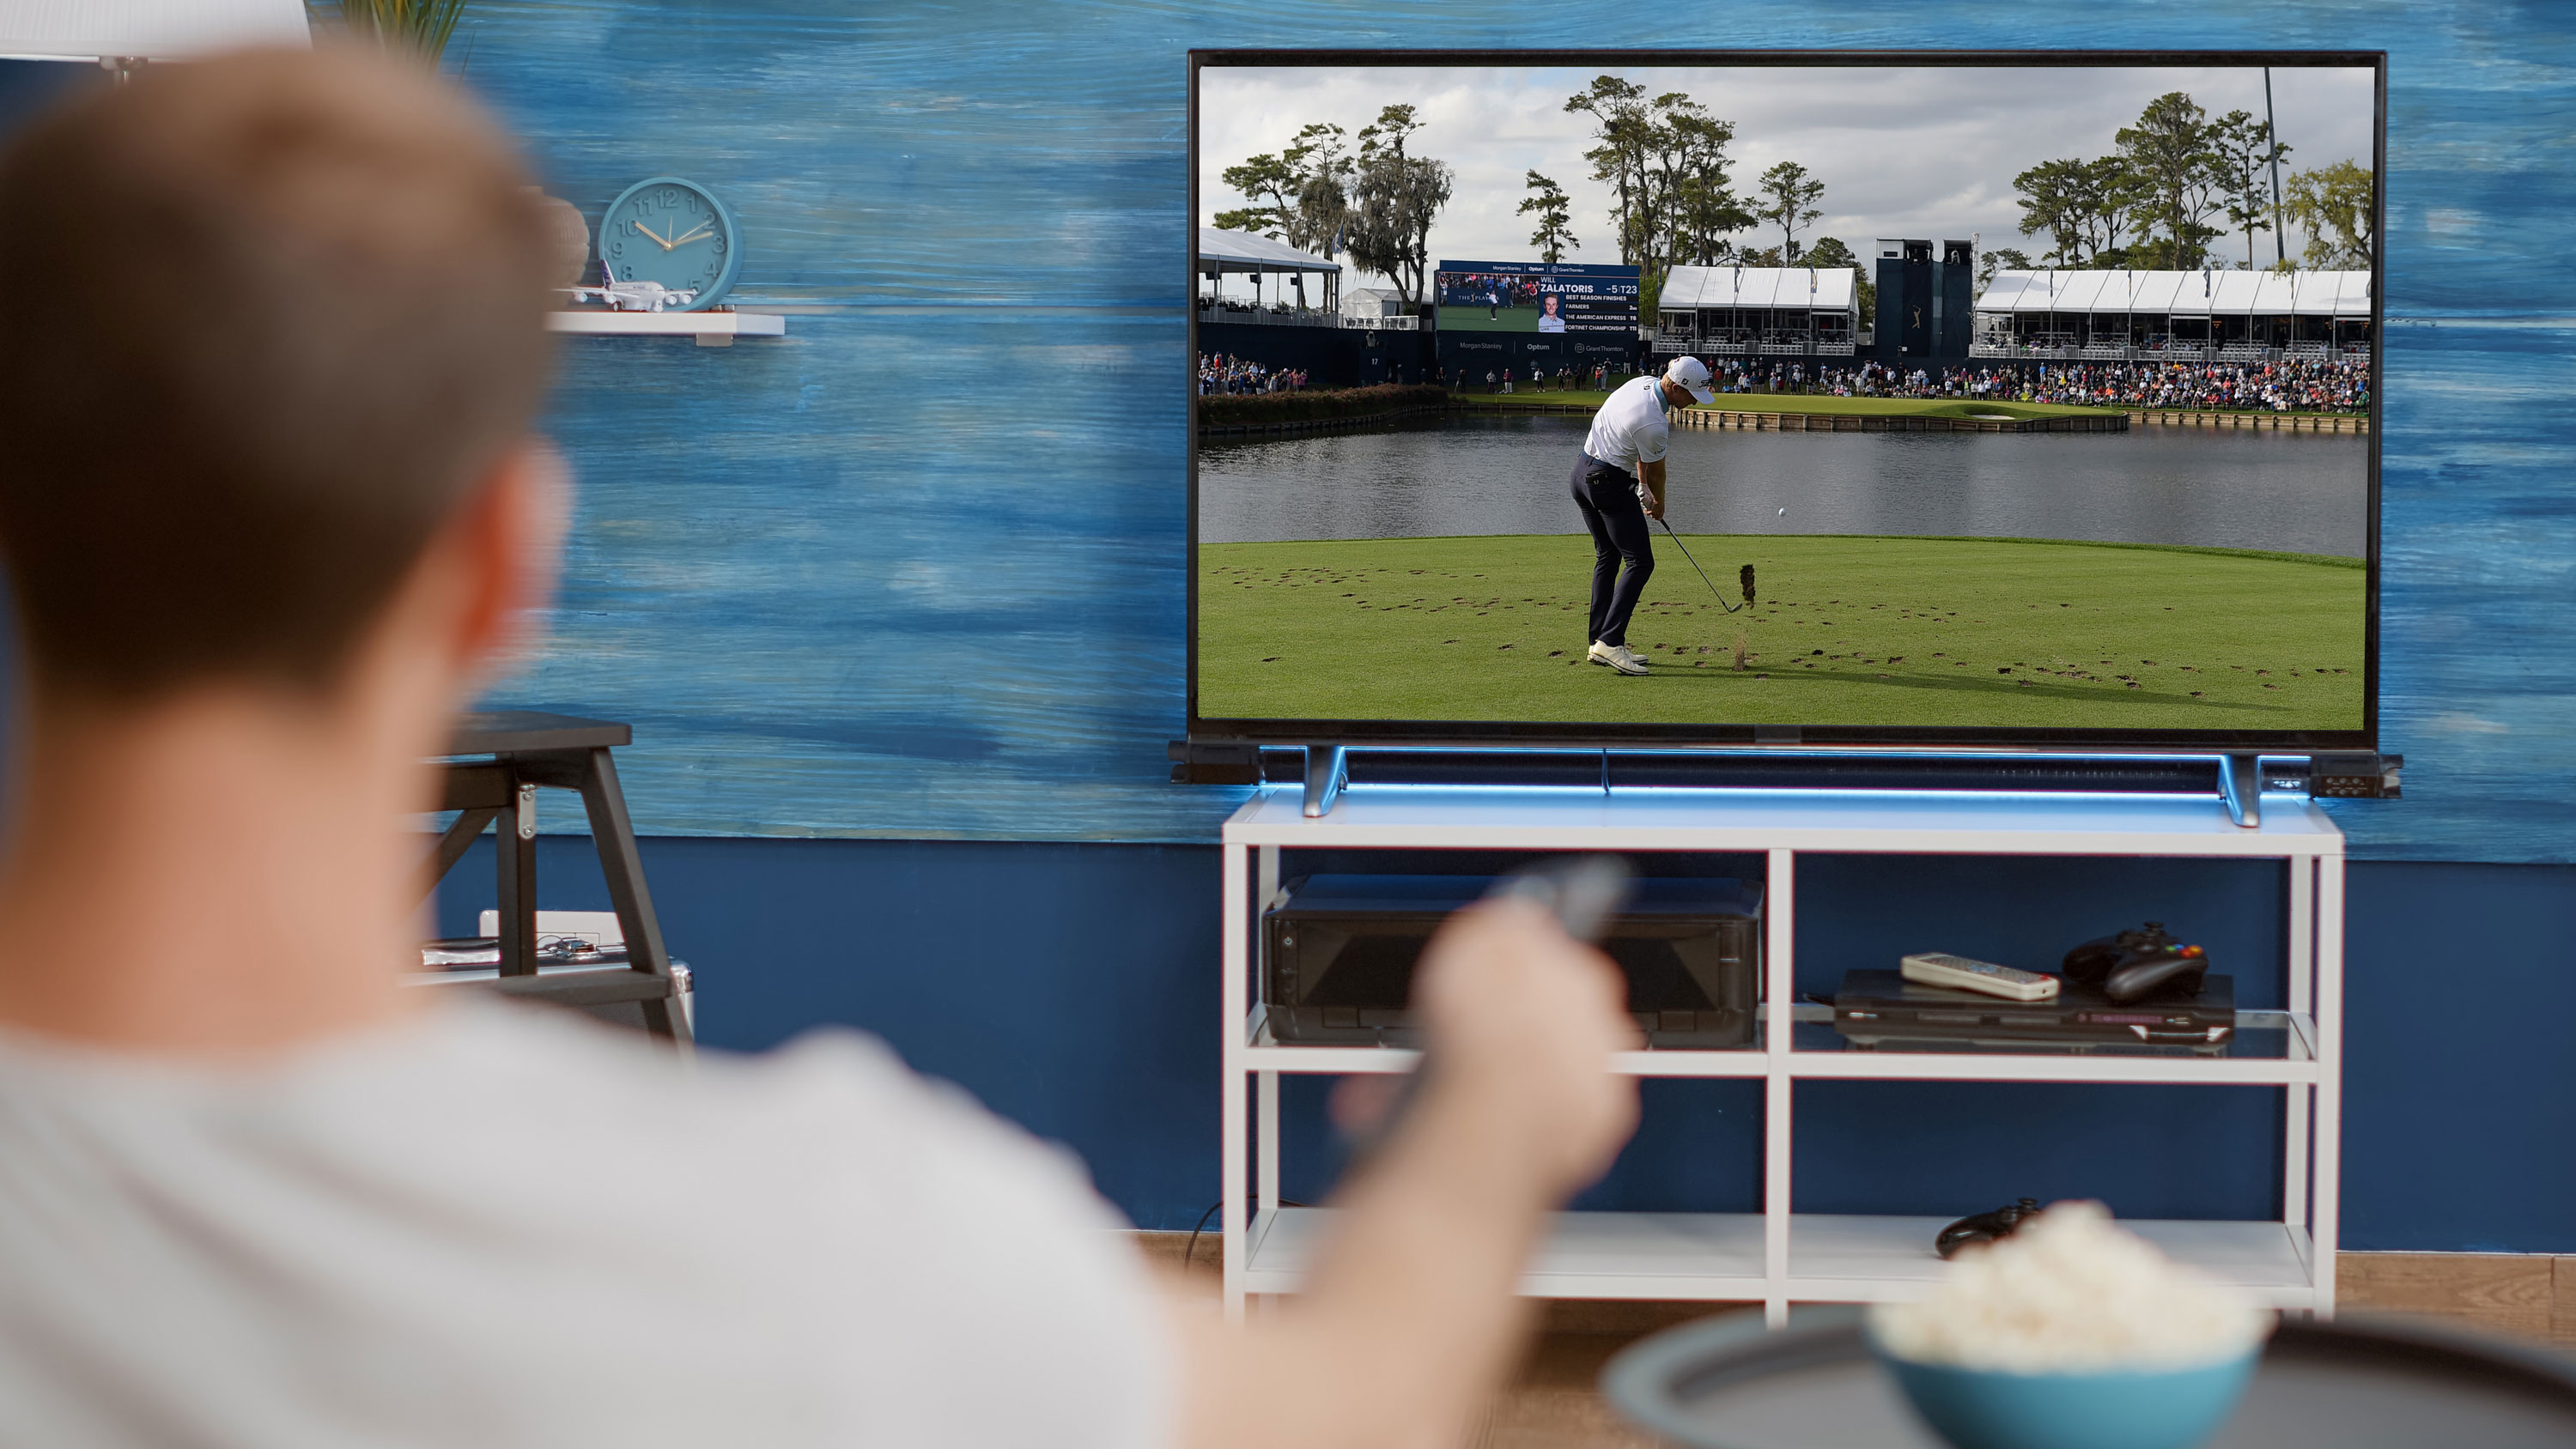 Players 2023: to watch golf TV like genius | Instruction | GolfDigest.com